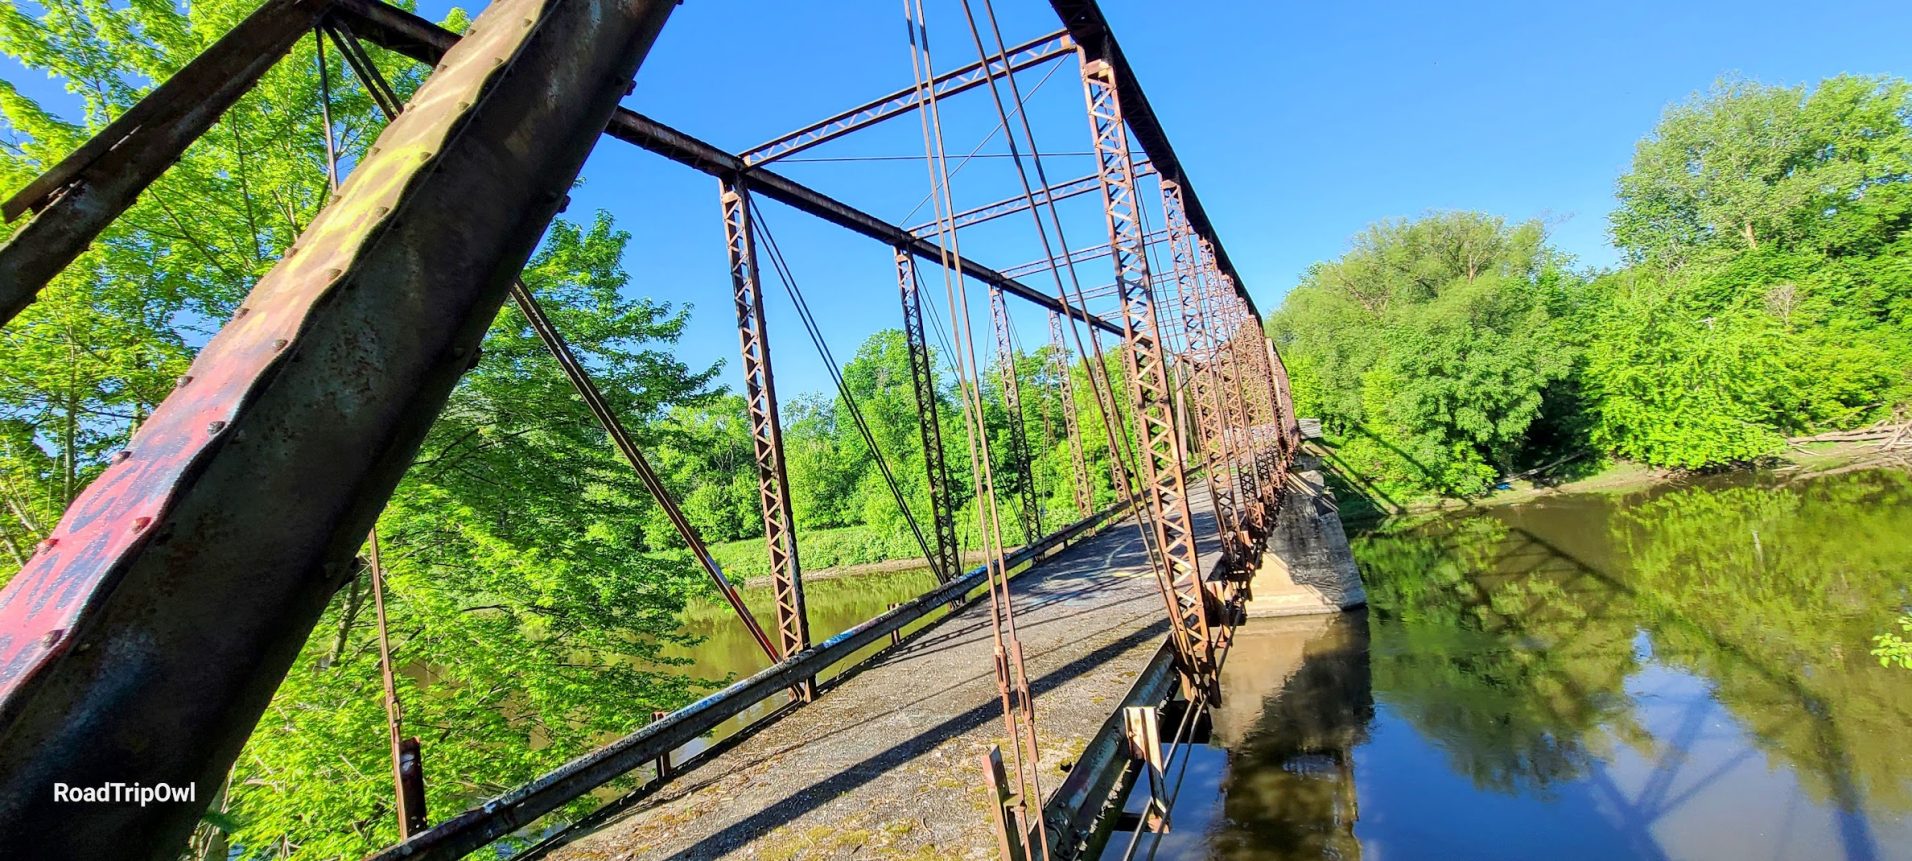 Historical landmark, Bailey bridge also known as Smith bridge in Midland, Michigan.